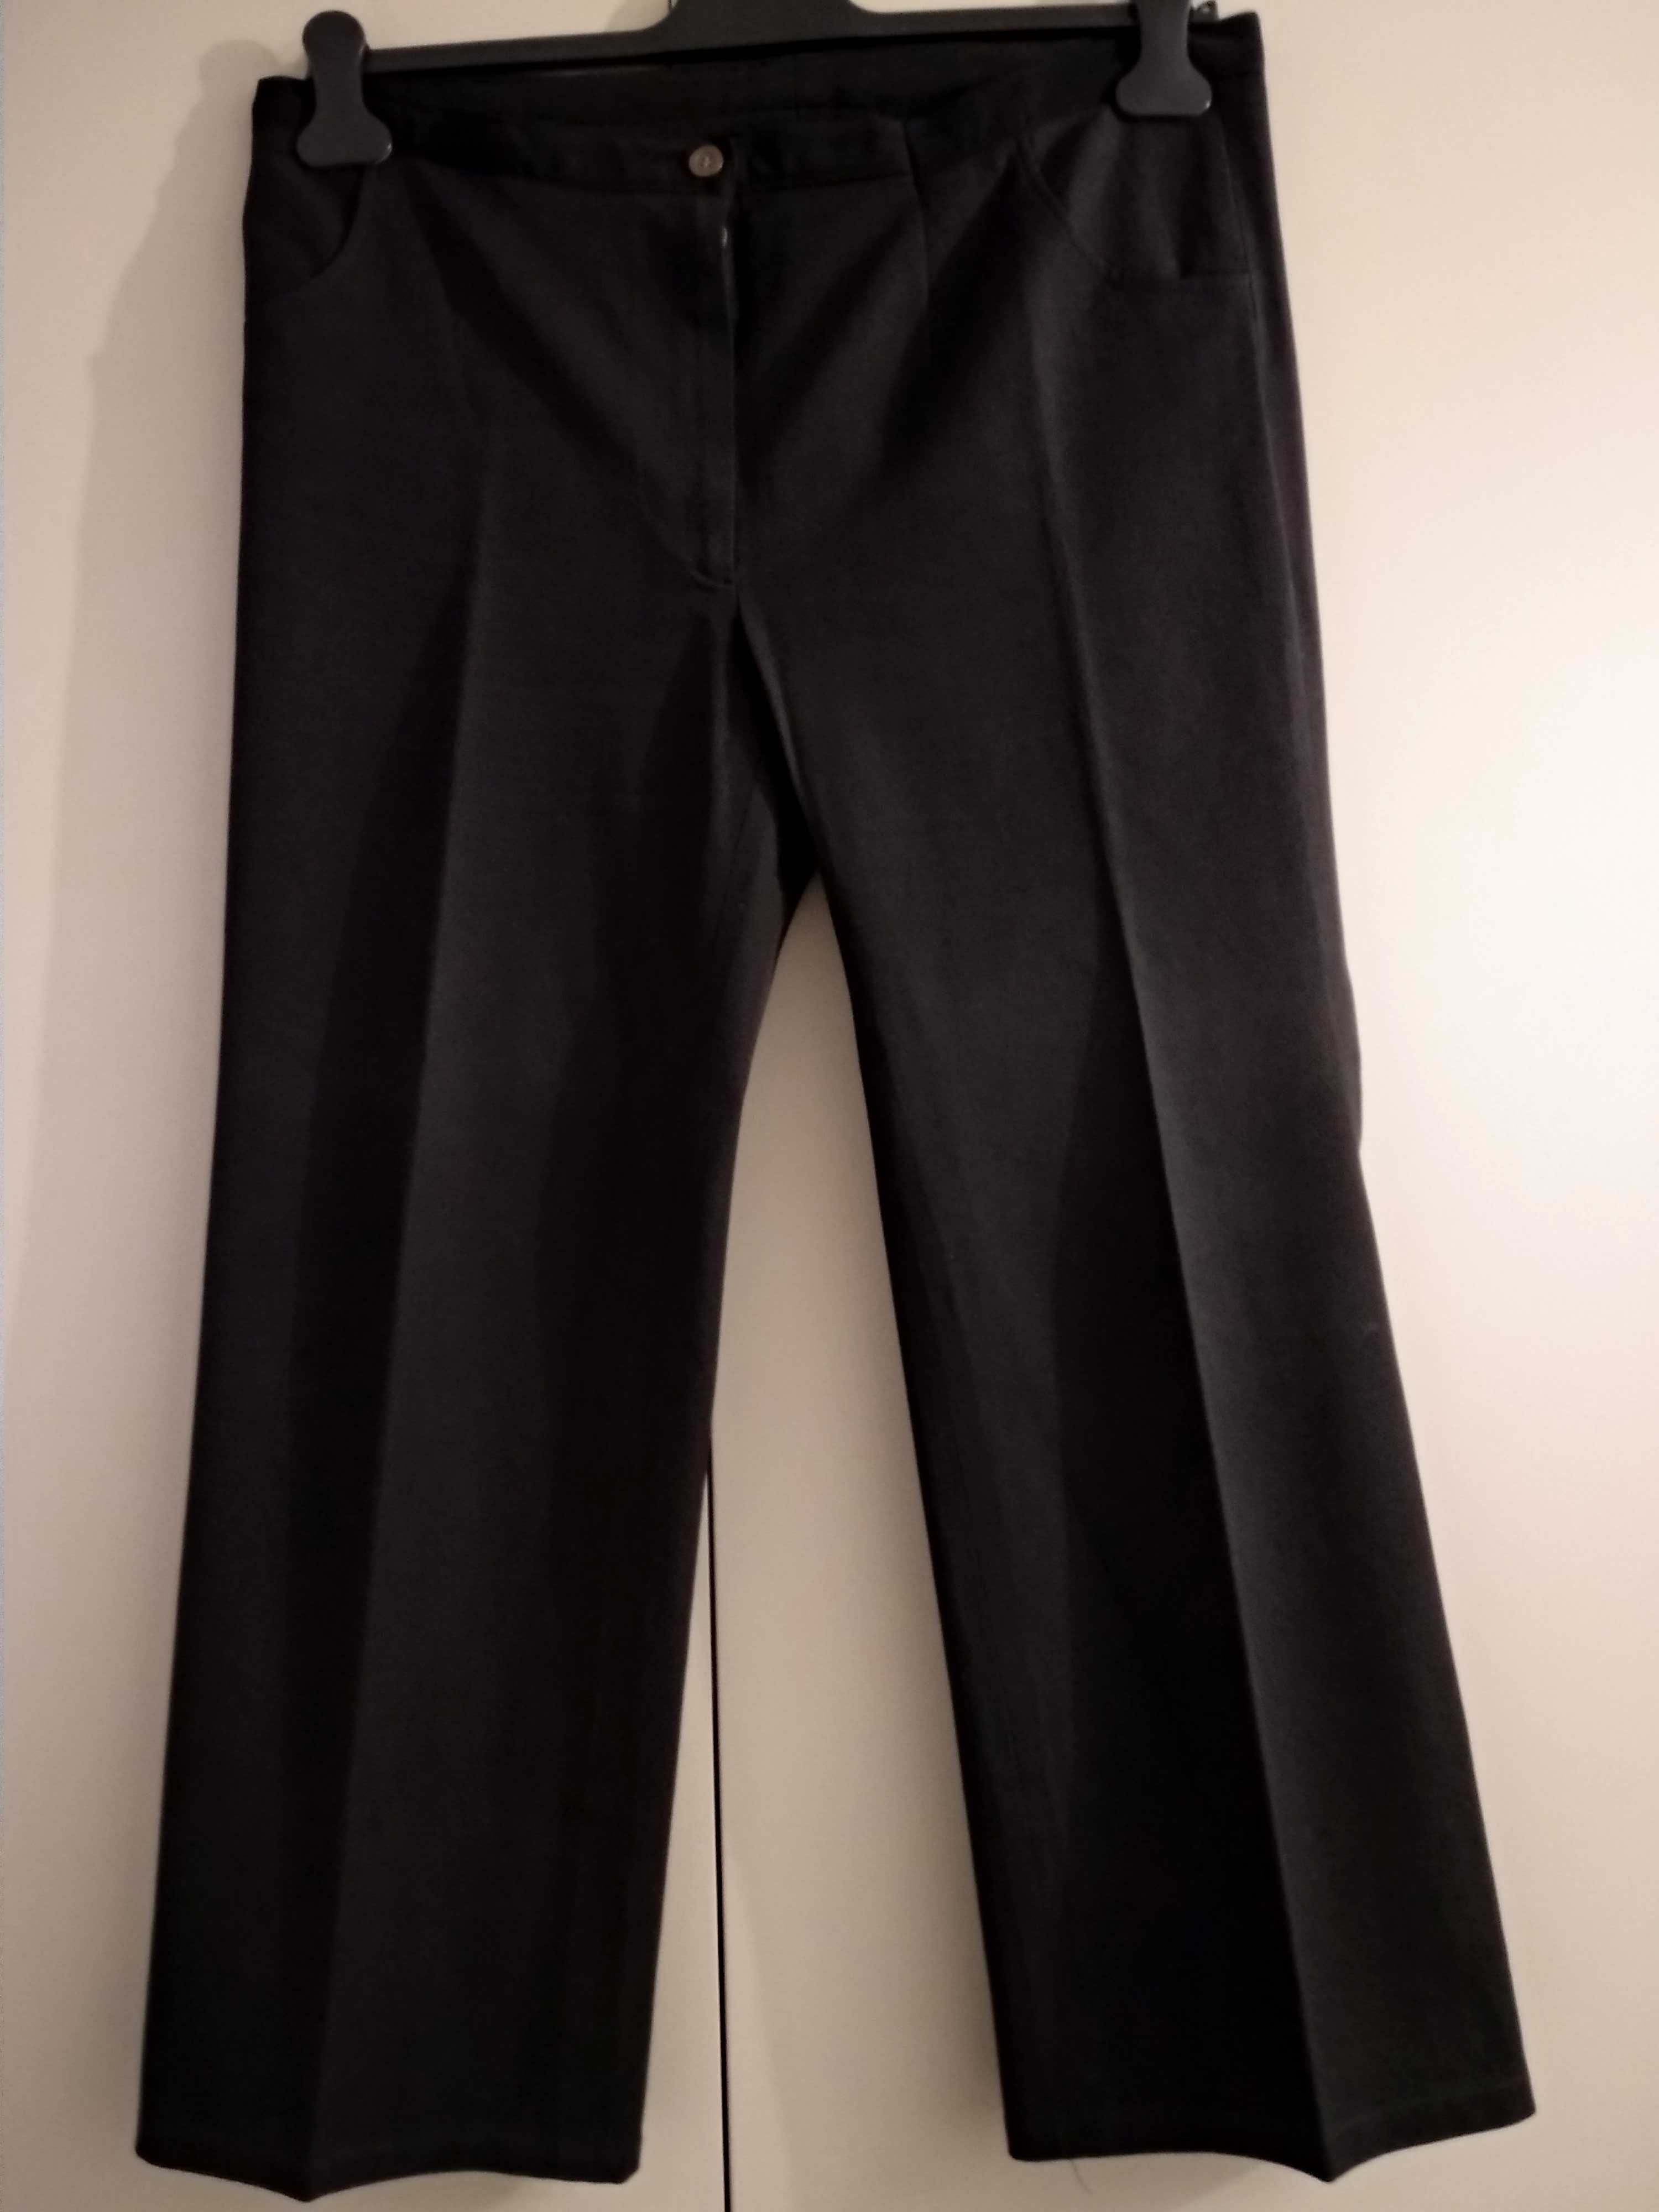 Spodnie  materiałowe, czarne, rozmiar 50, pas 93 cm.